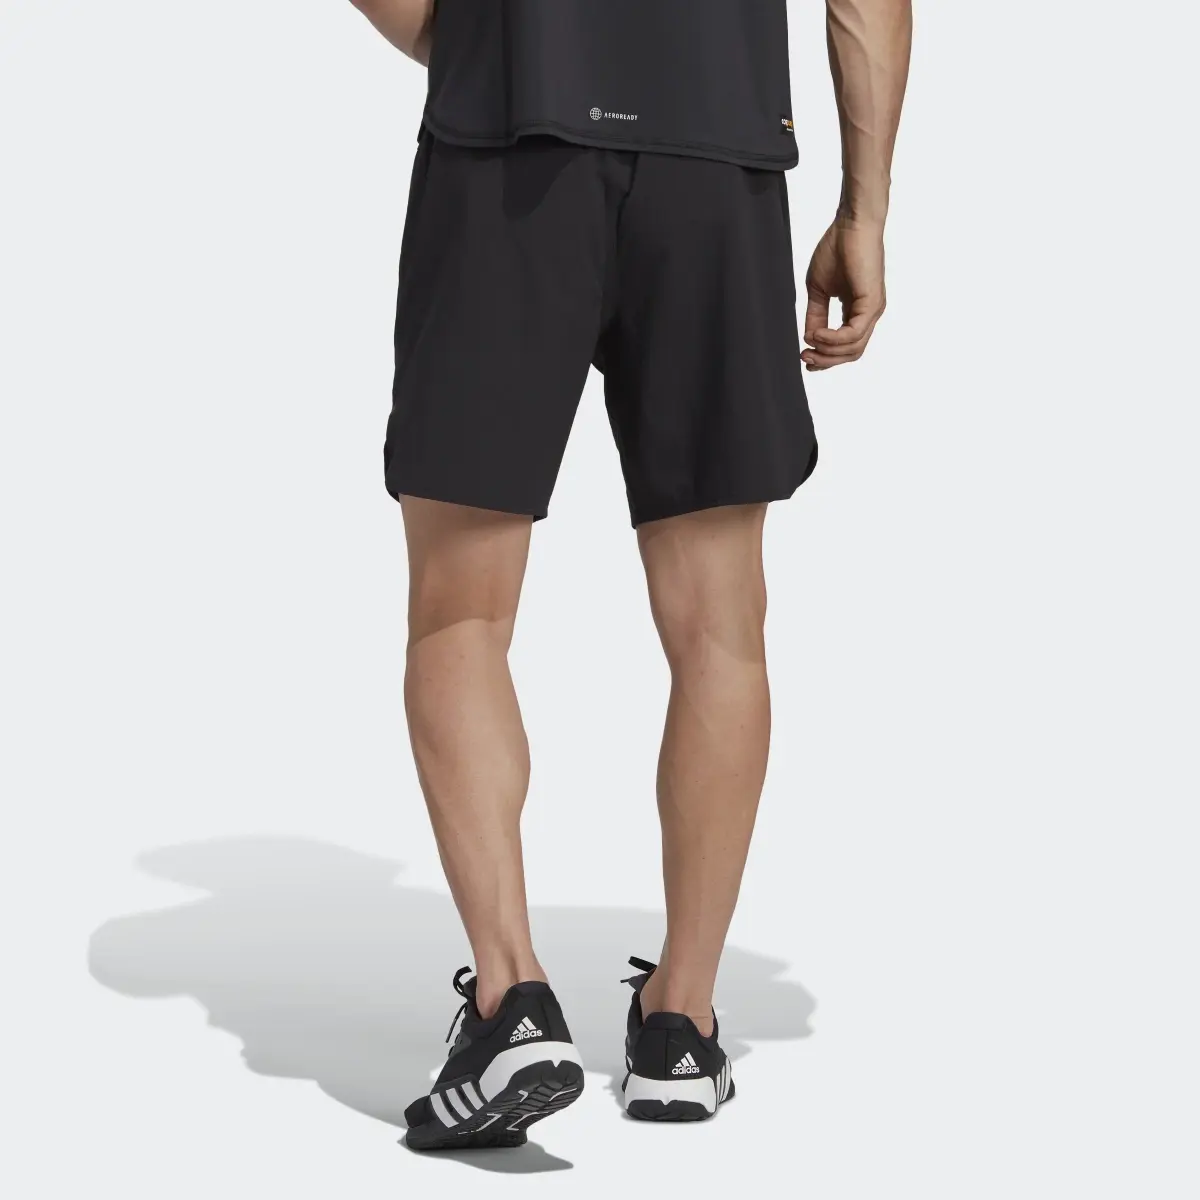 Adidas Short Designed 4 Training CORDURA® Workout. 2